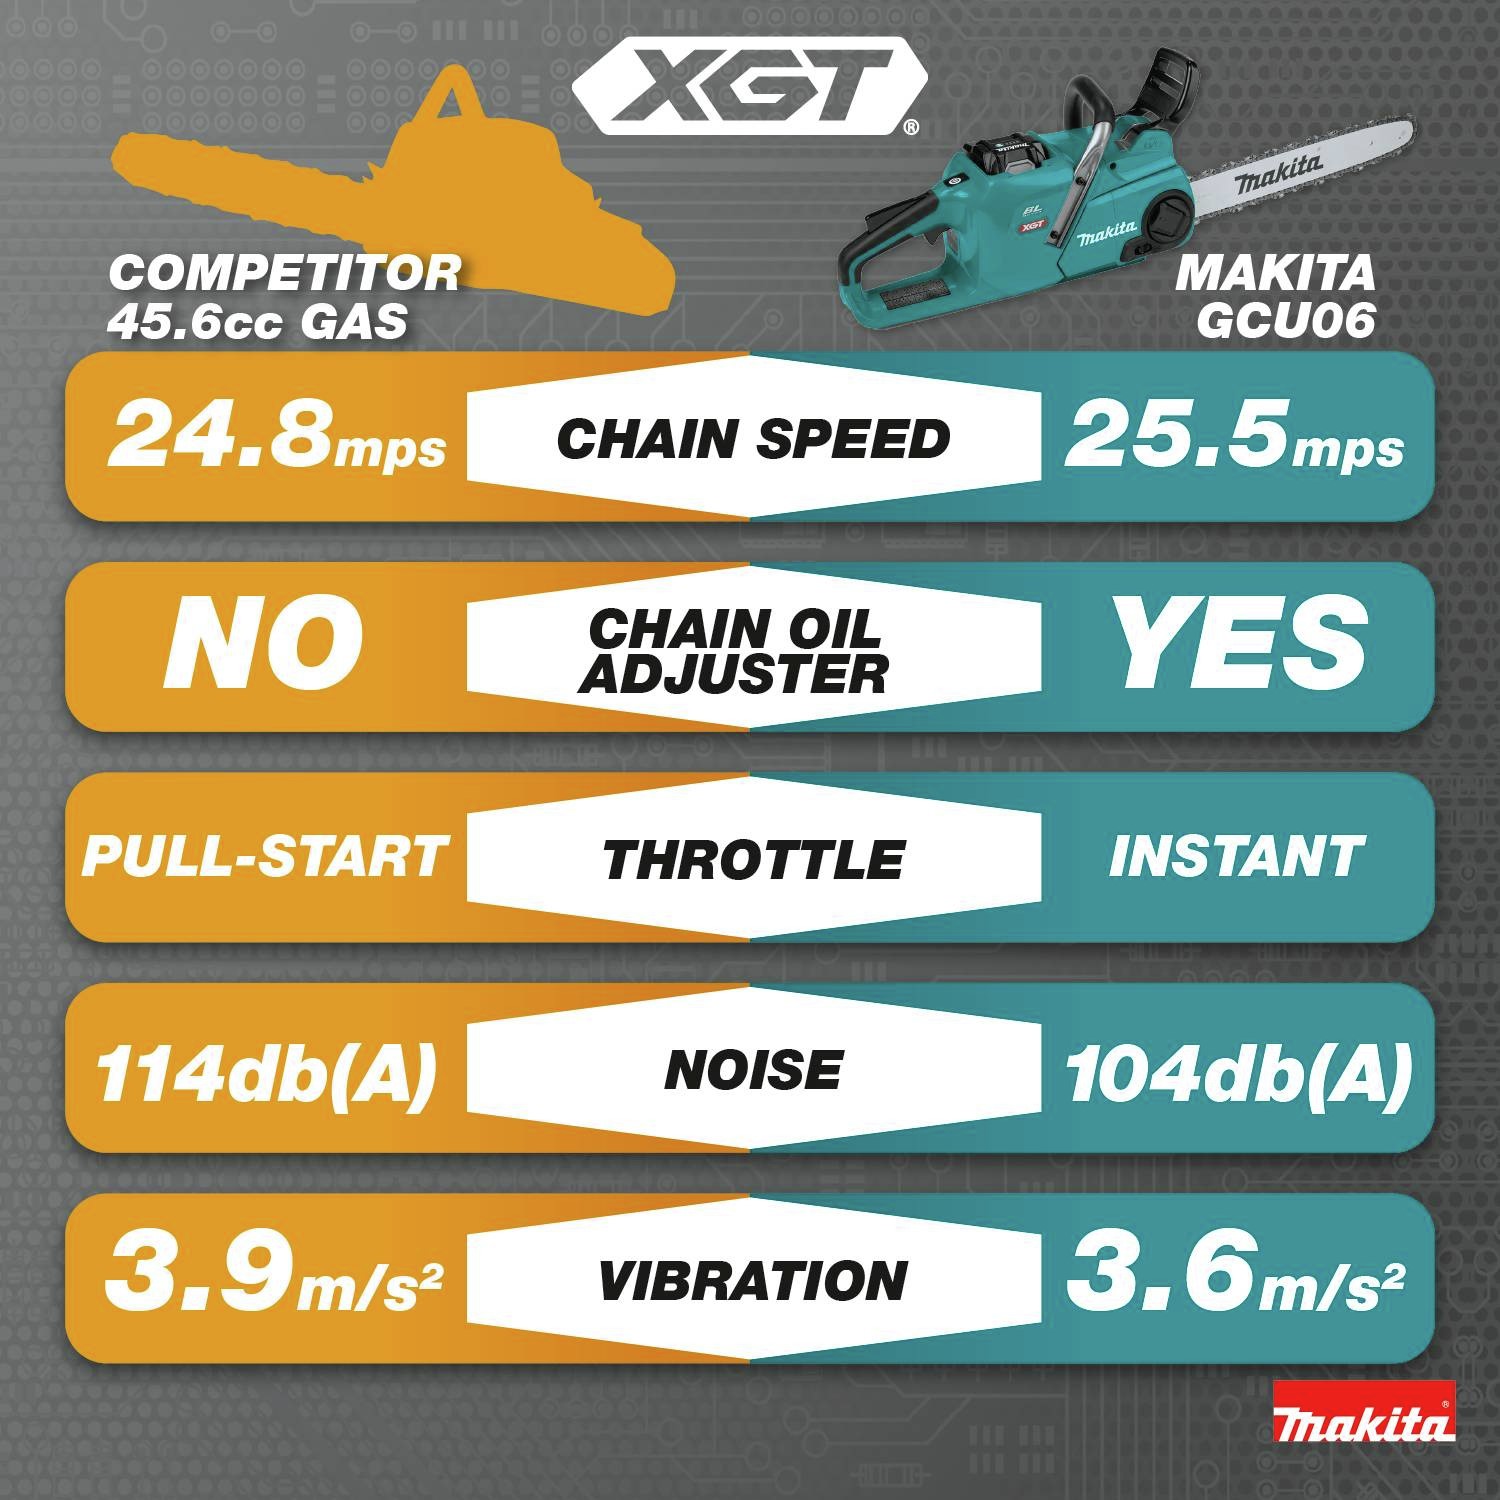 Competitor 45.6cc Gas vs Makita GCU06